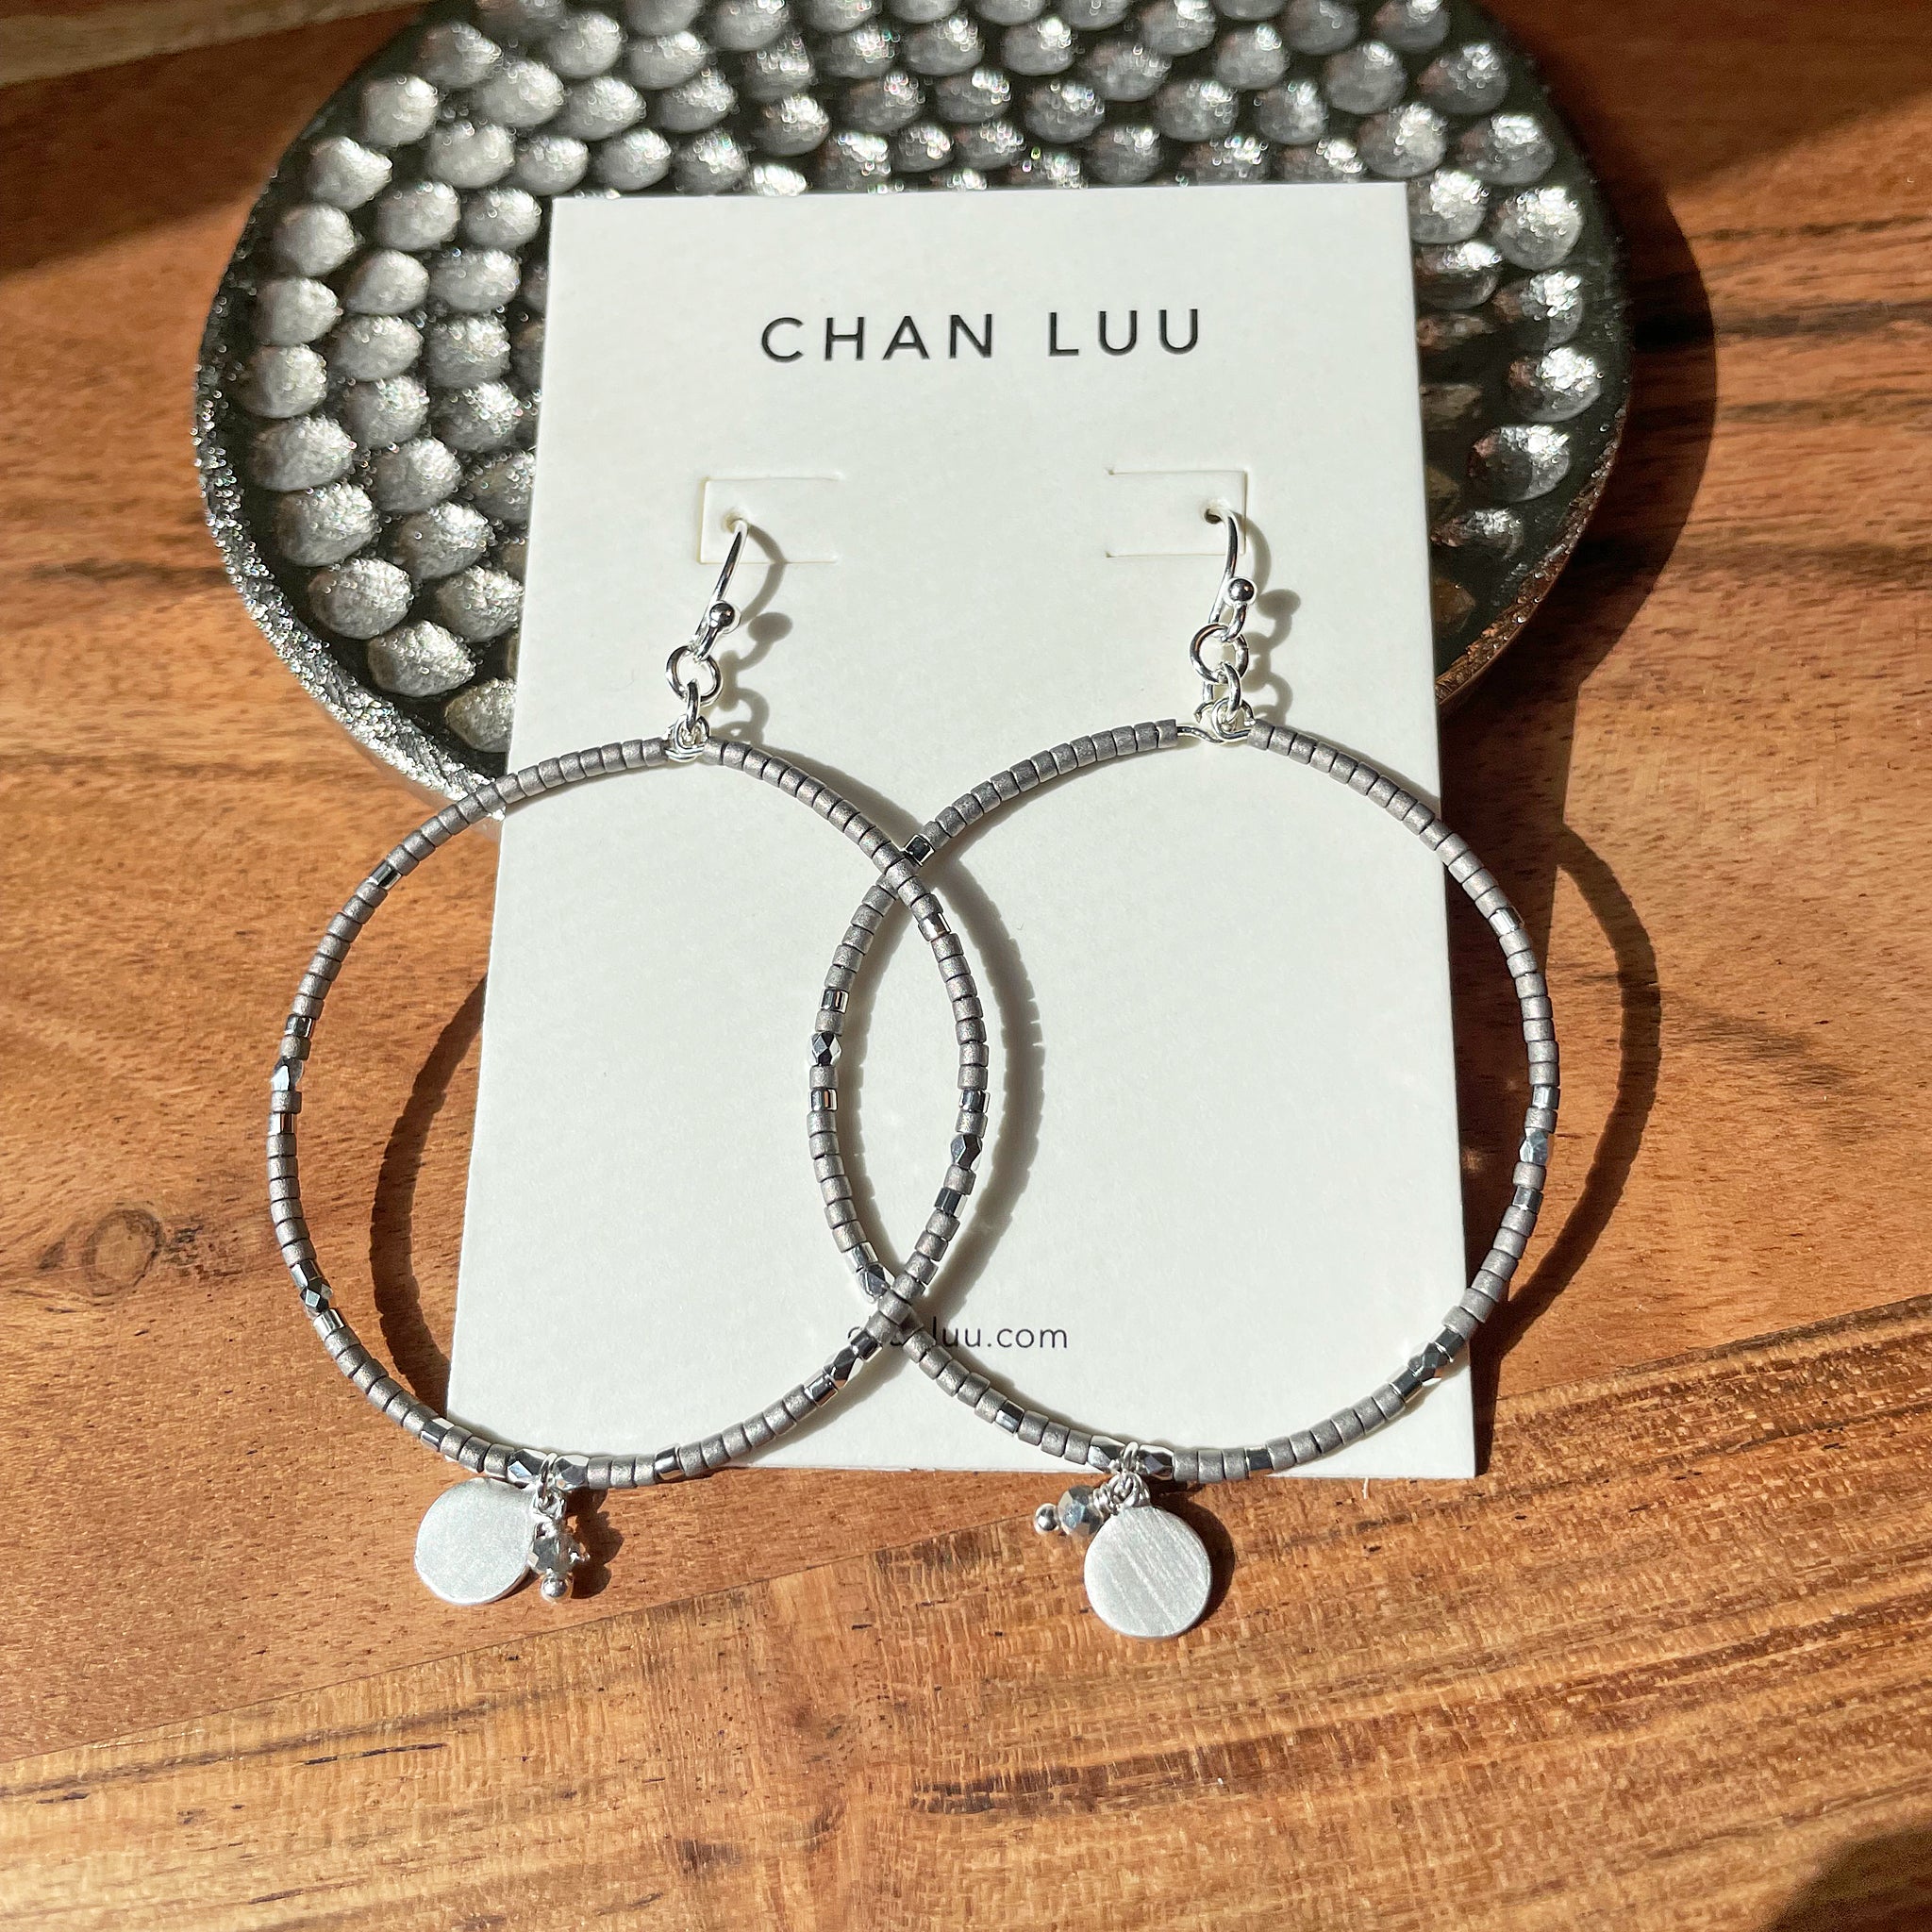 Chan Luu Silver Hoop Earrings with Grey Silver Seed Beads and Dangle Charm